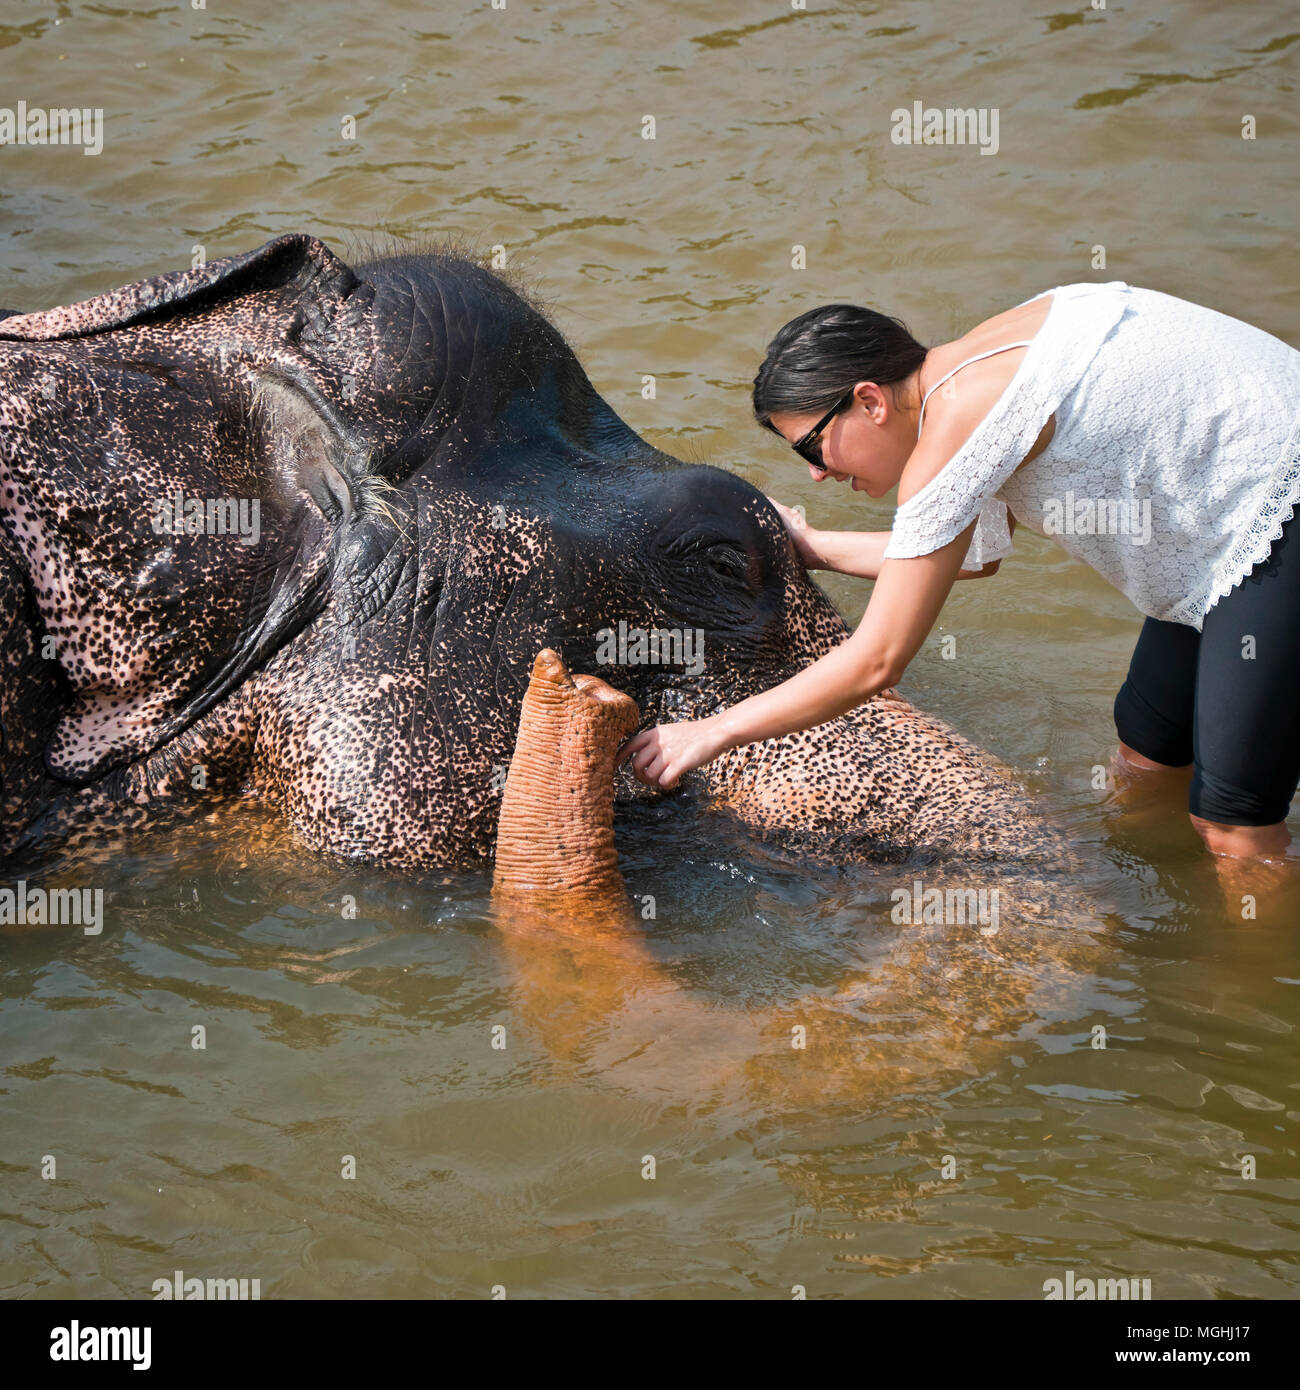 Square view of an elephant having a bath at Pinnawala Elephant Orphanage in Sri Lanka. Stock Photo